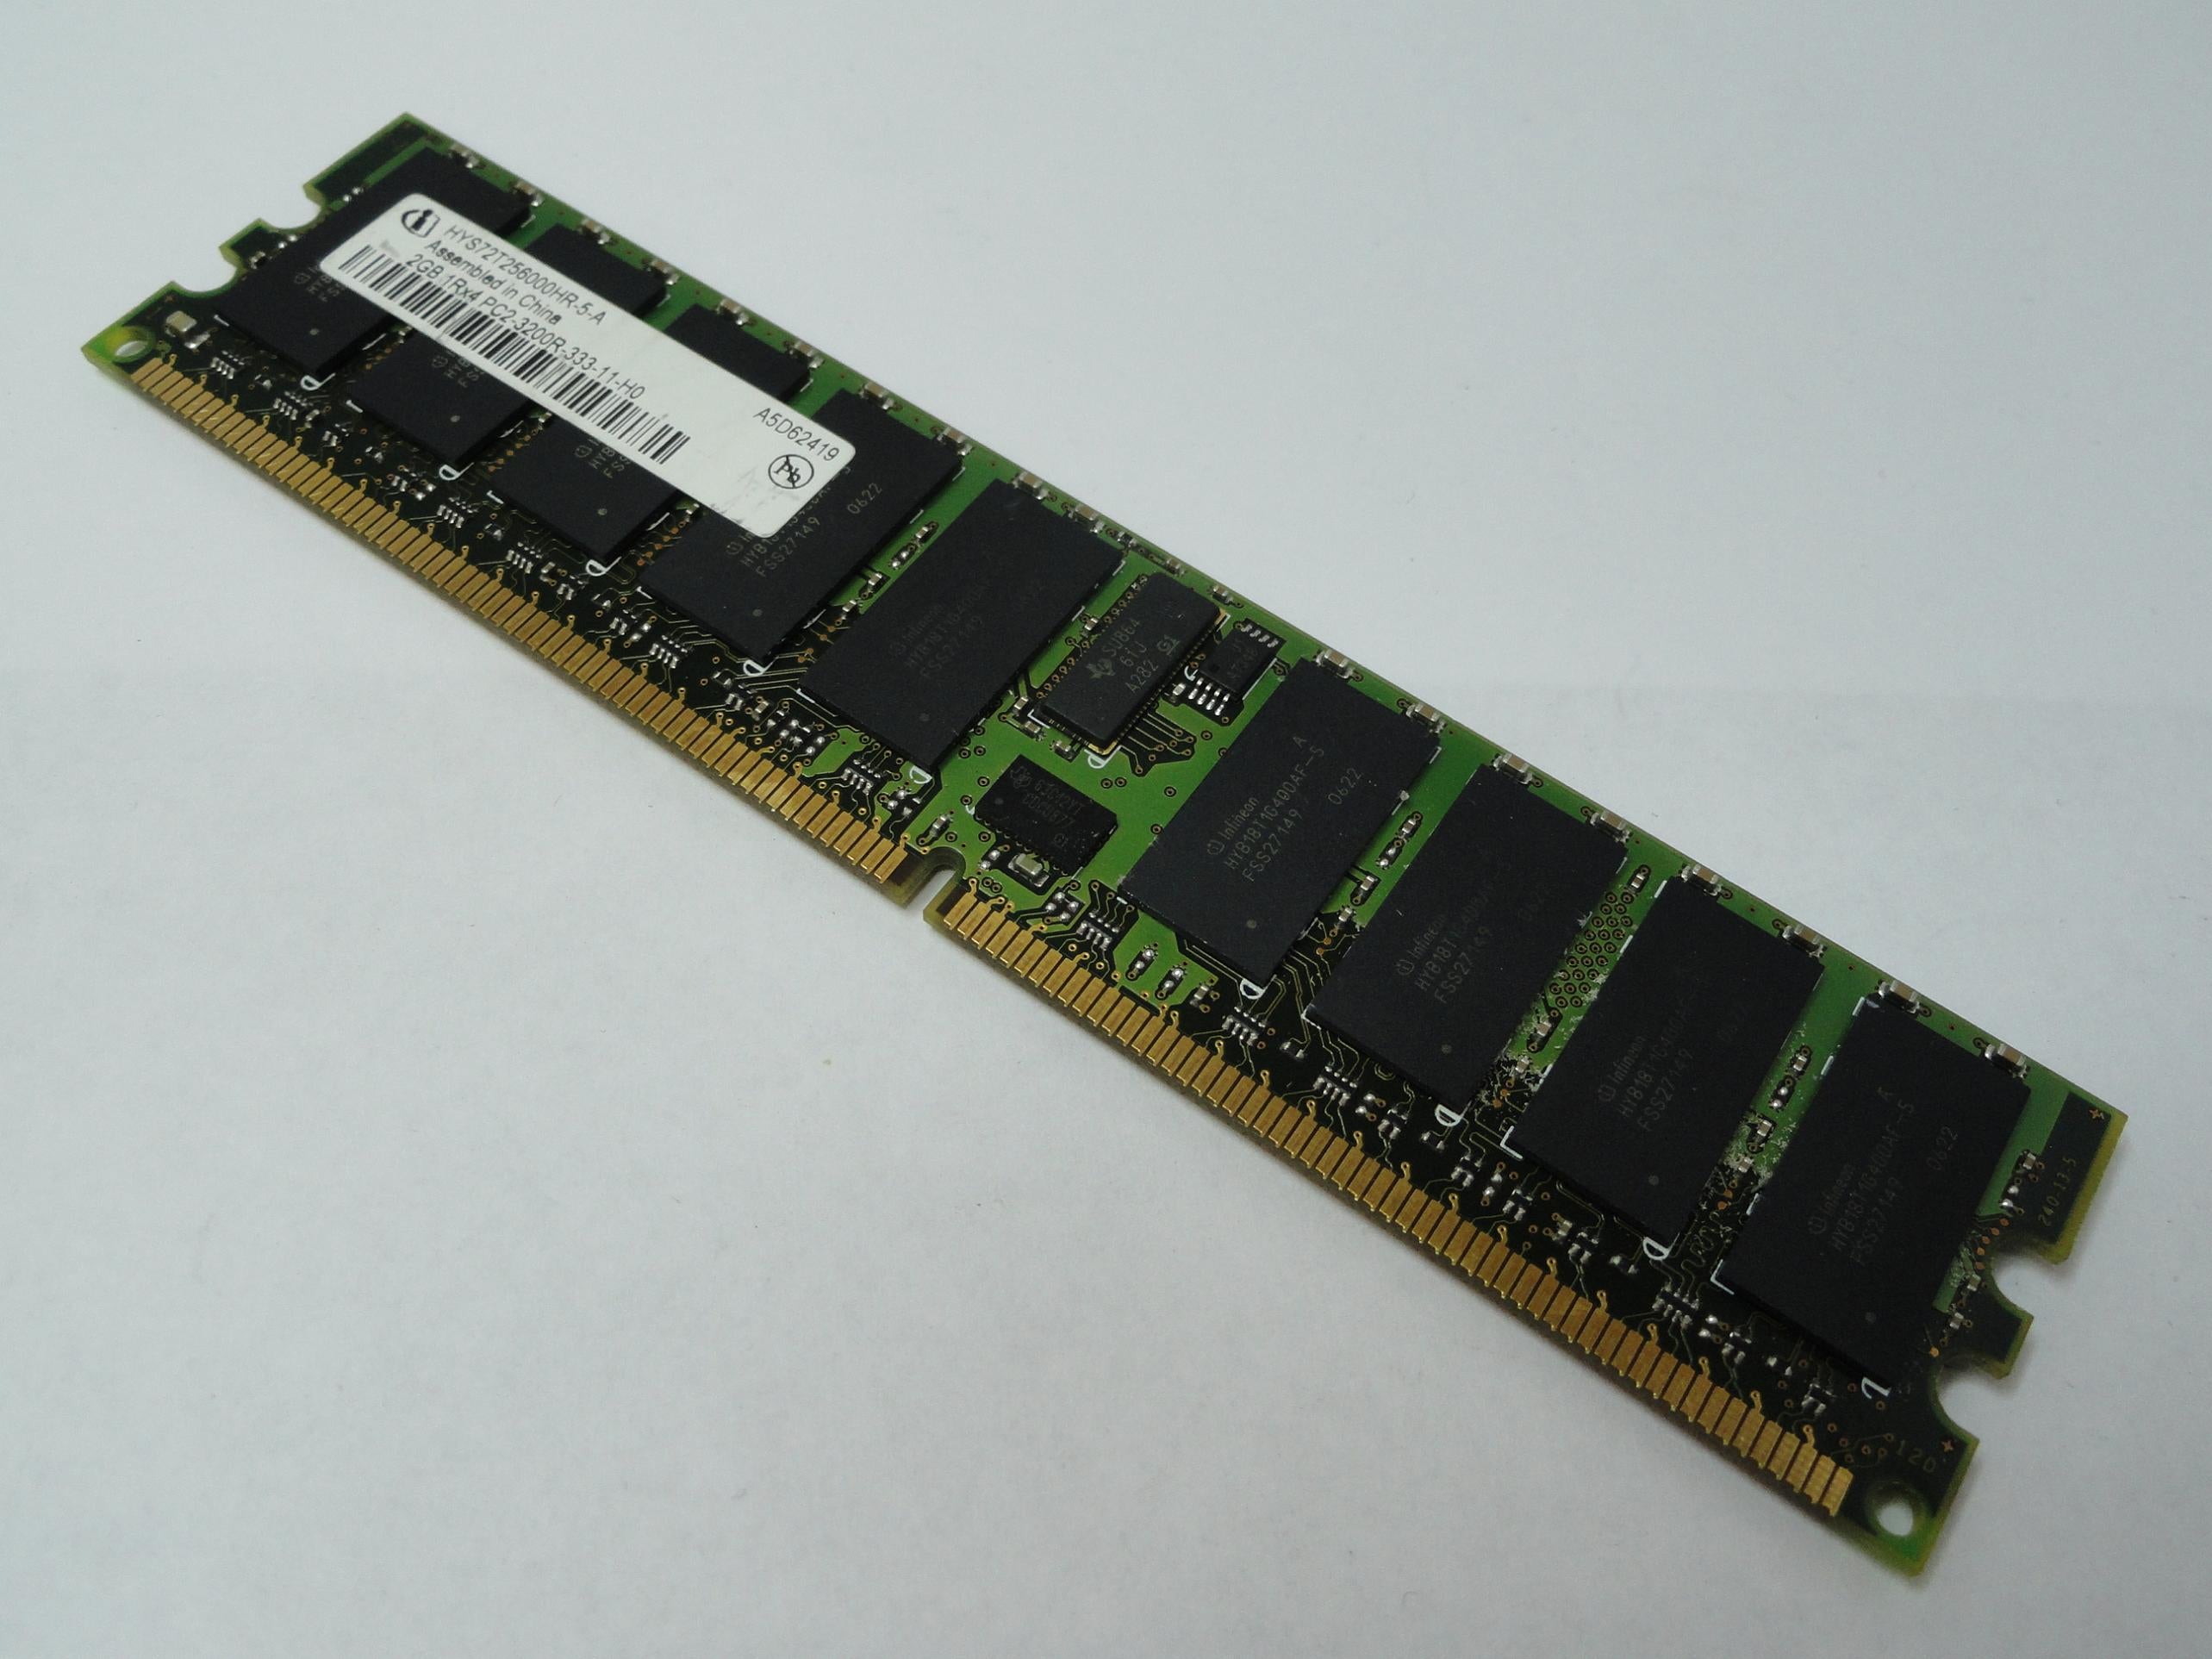 PR17929_PC2-3200R-333-11-H0_Infineon 2Gb Memory Module - Image2